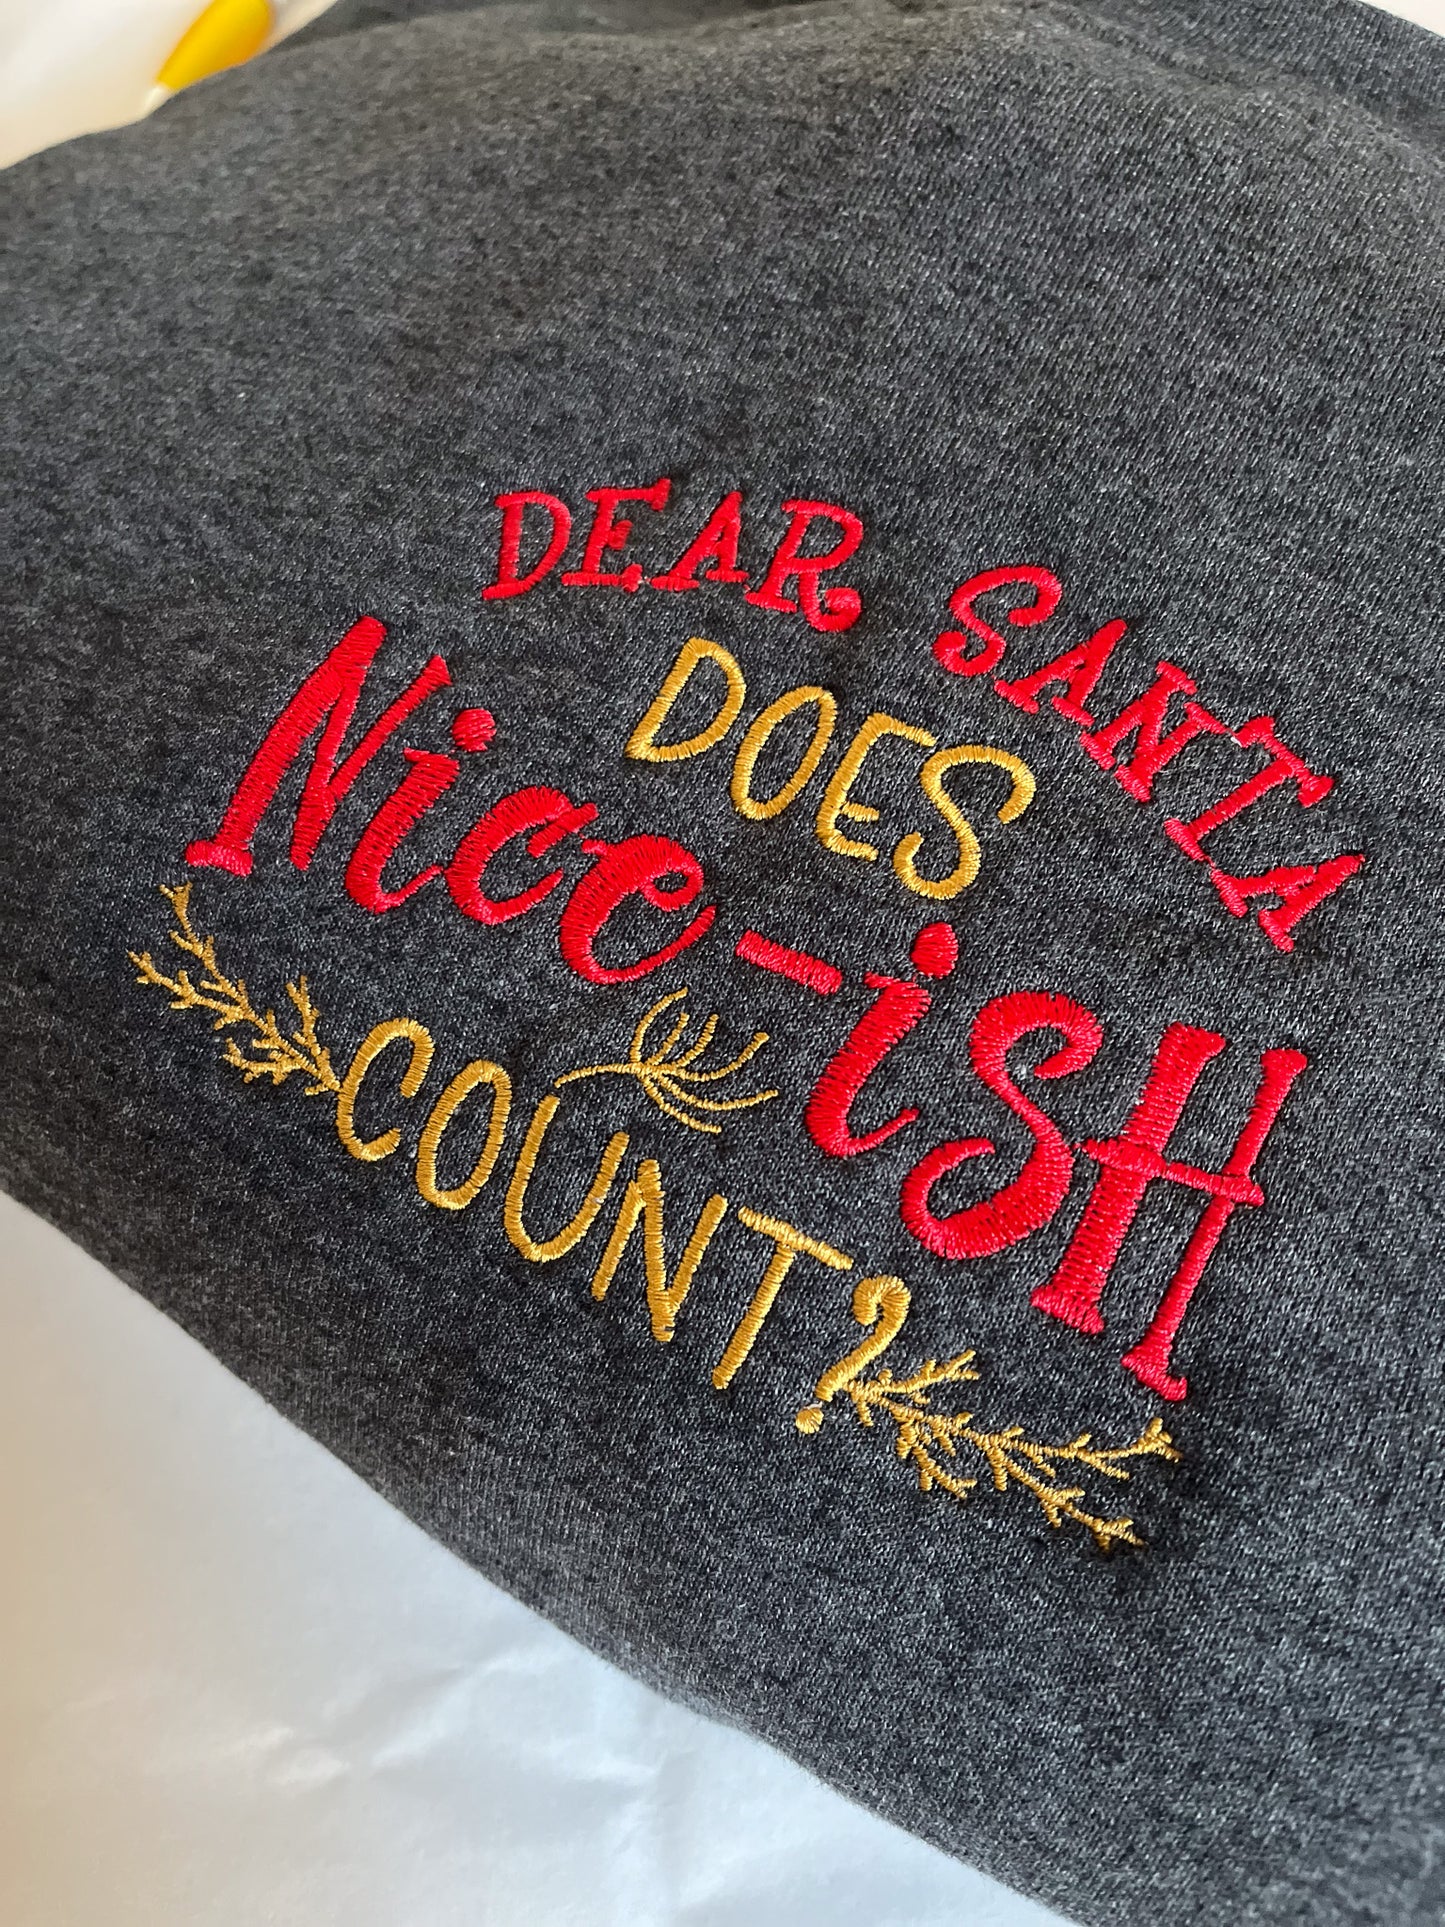 KIDS🎄Cheeky Christmas Jumper: 'Dear Santa, Does Nice Ish Count?🙊